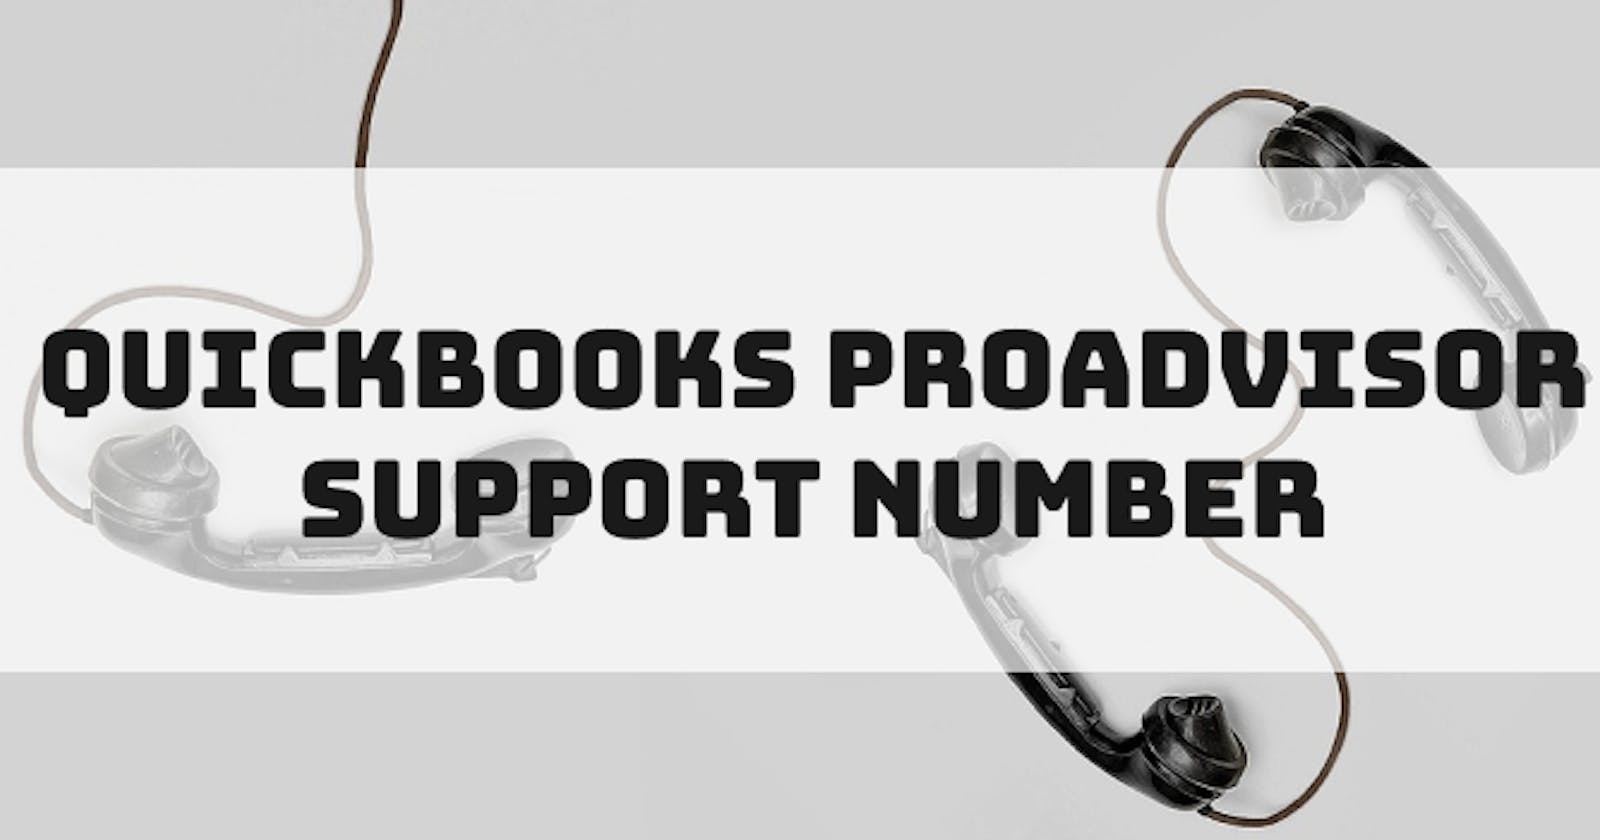 QuickBooks Proadvisor Support Number